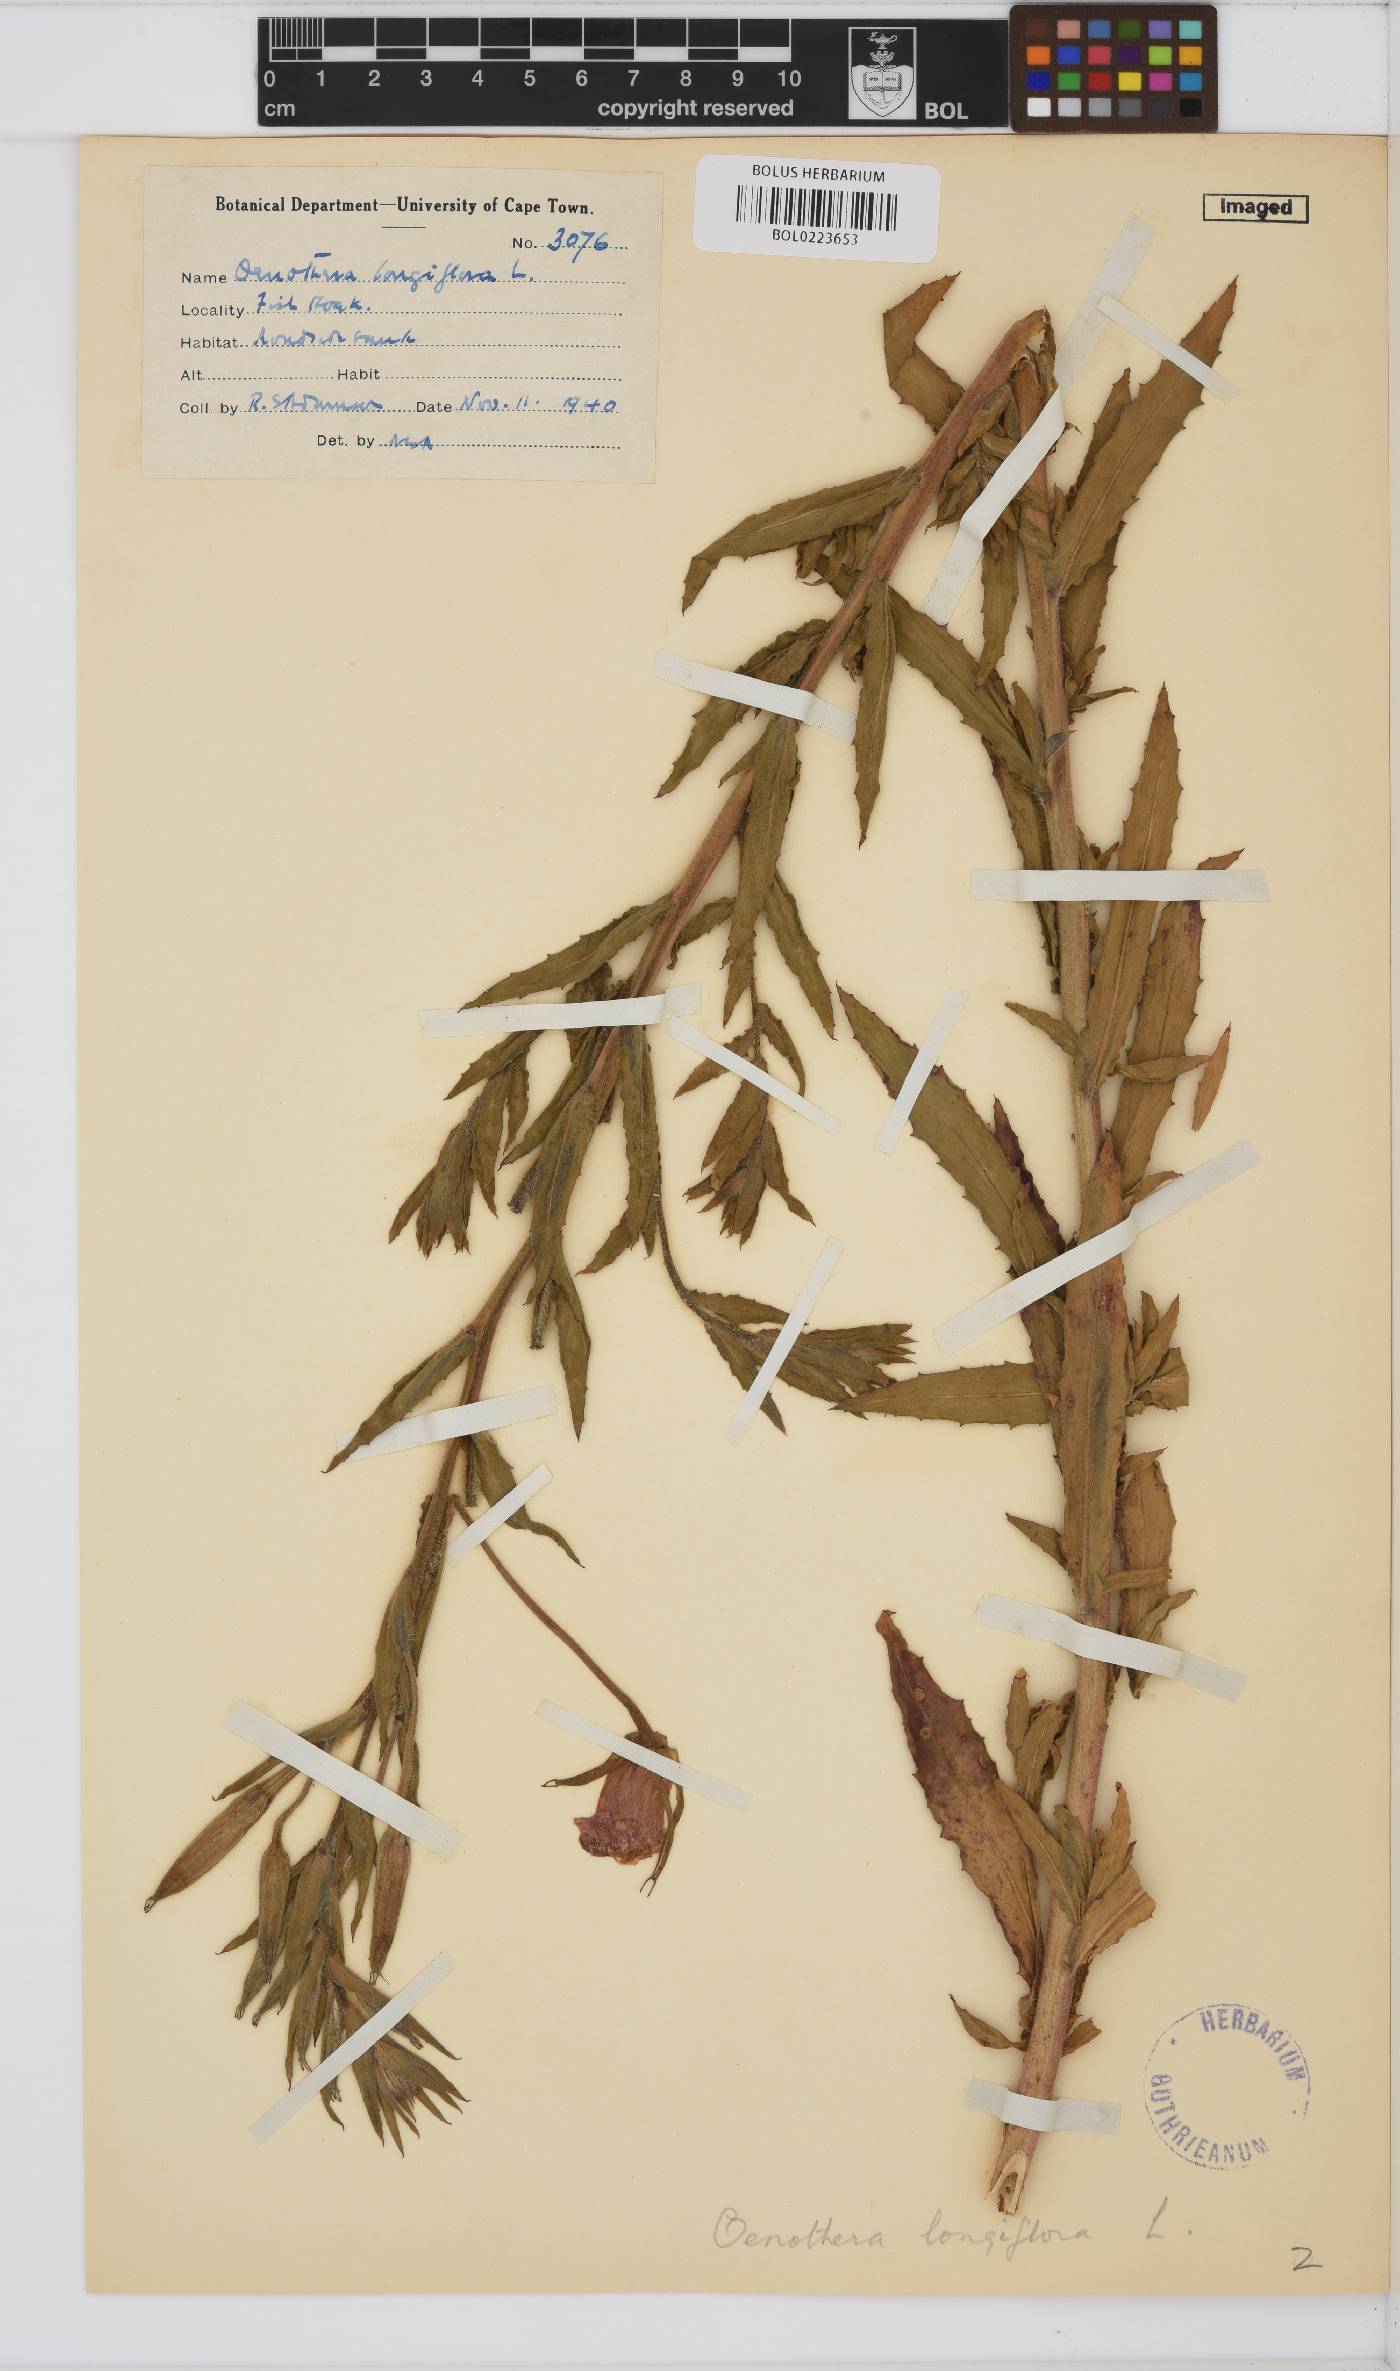 Oenothera longiflora image